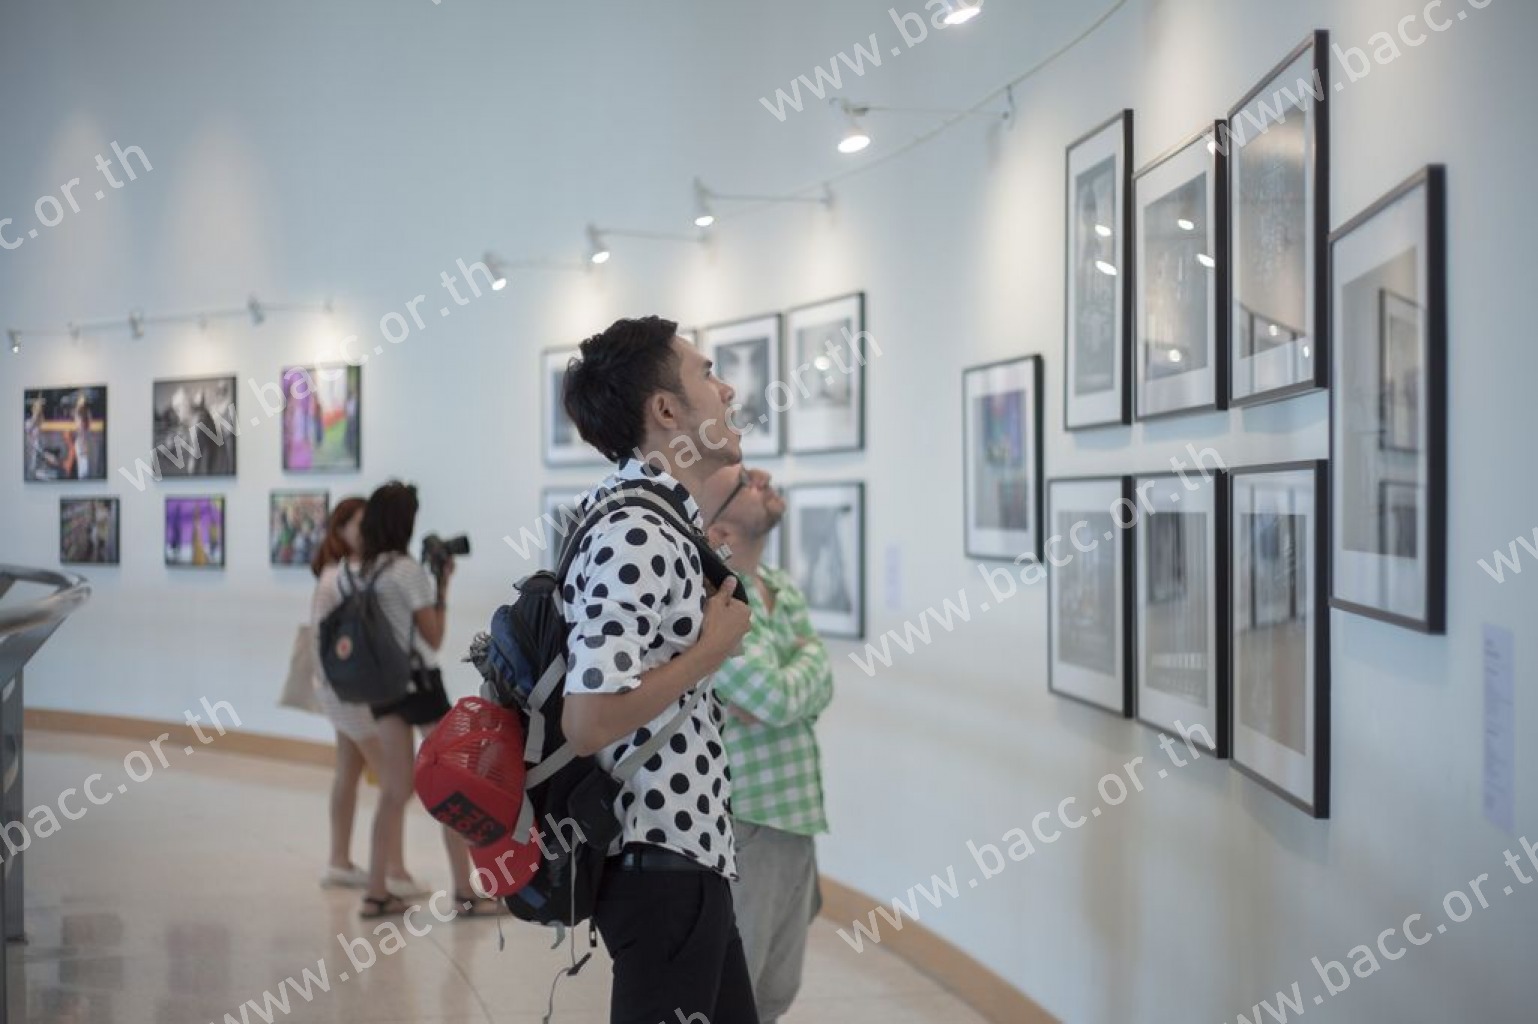 PhotoBangkok 2015 International Photography Festival